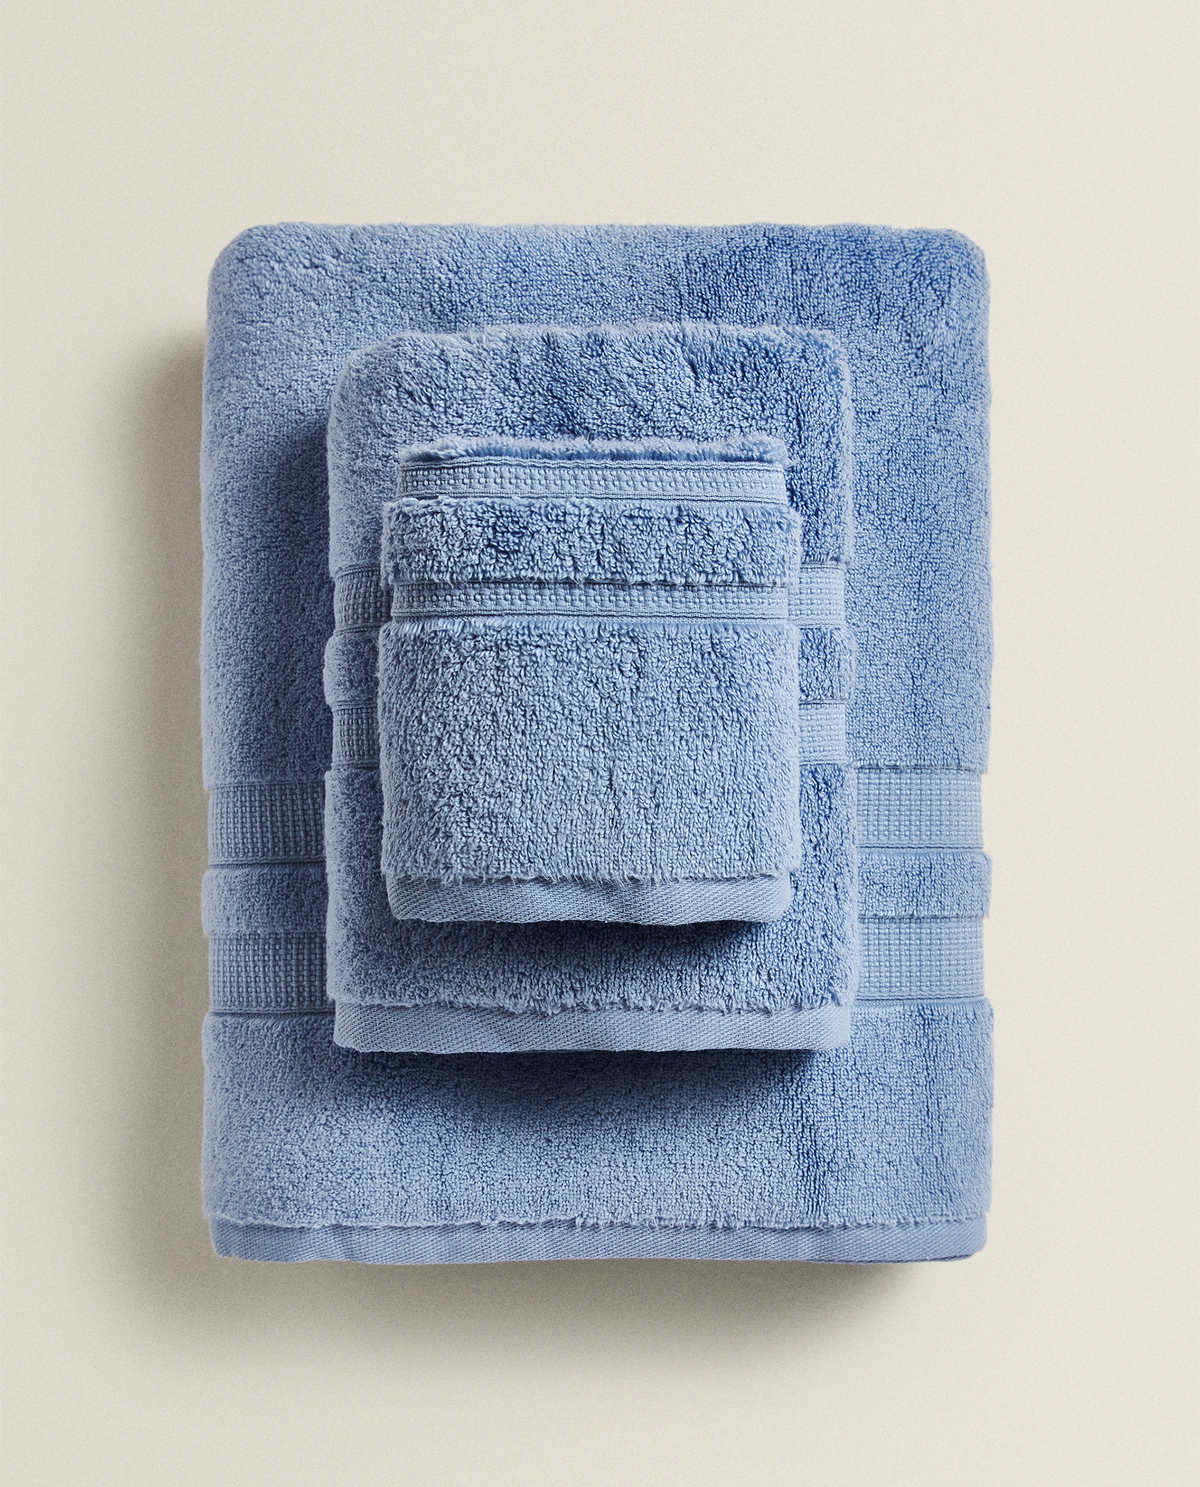 Home полотенца купить. Полотенце Zara Home. Zara 8272026 полотенца. Zara Home Extra Soft Towel with Double border. Полотенце кухонное Zara Home 2023.